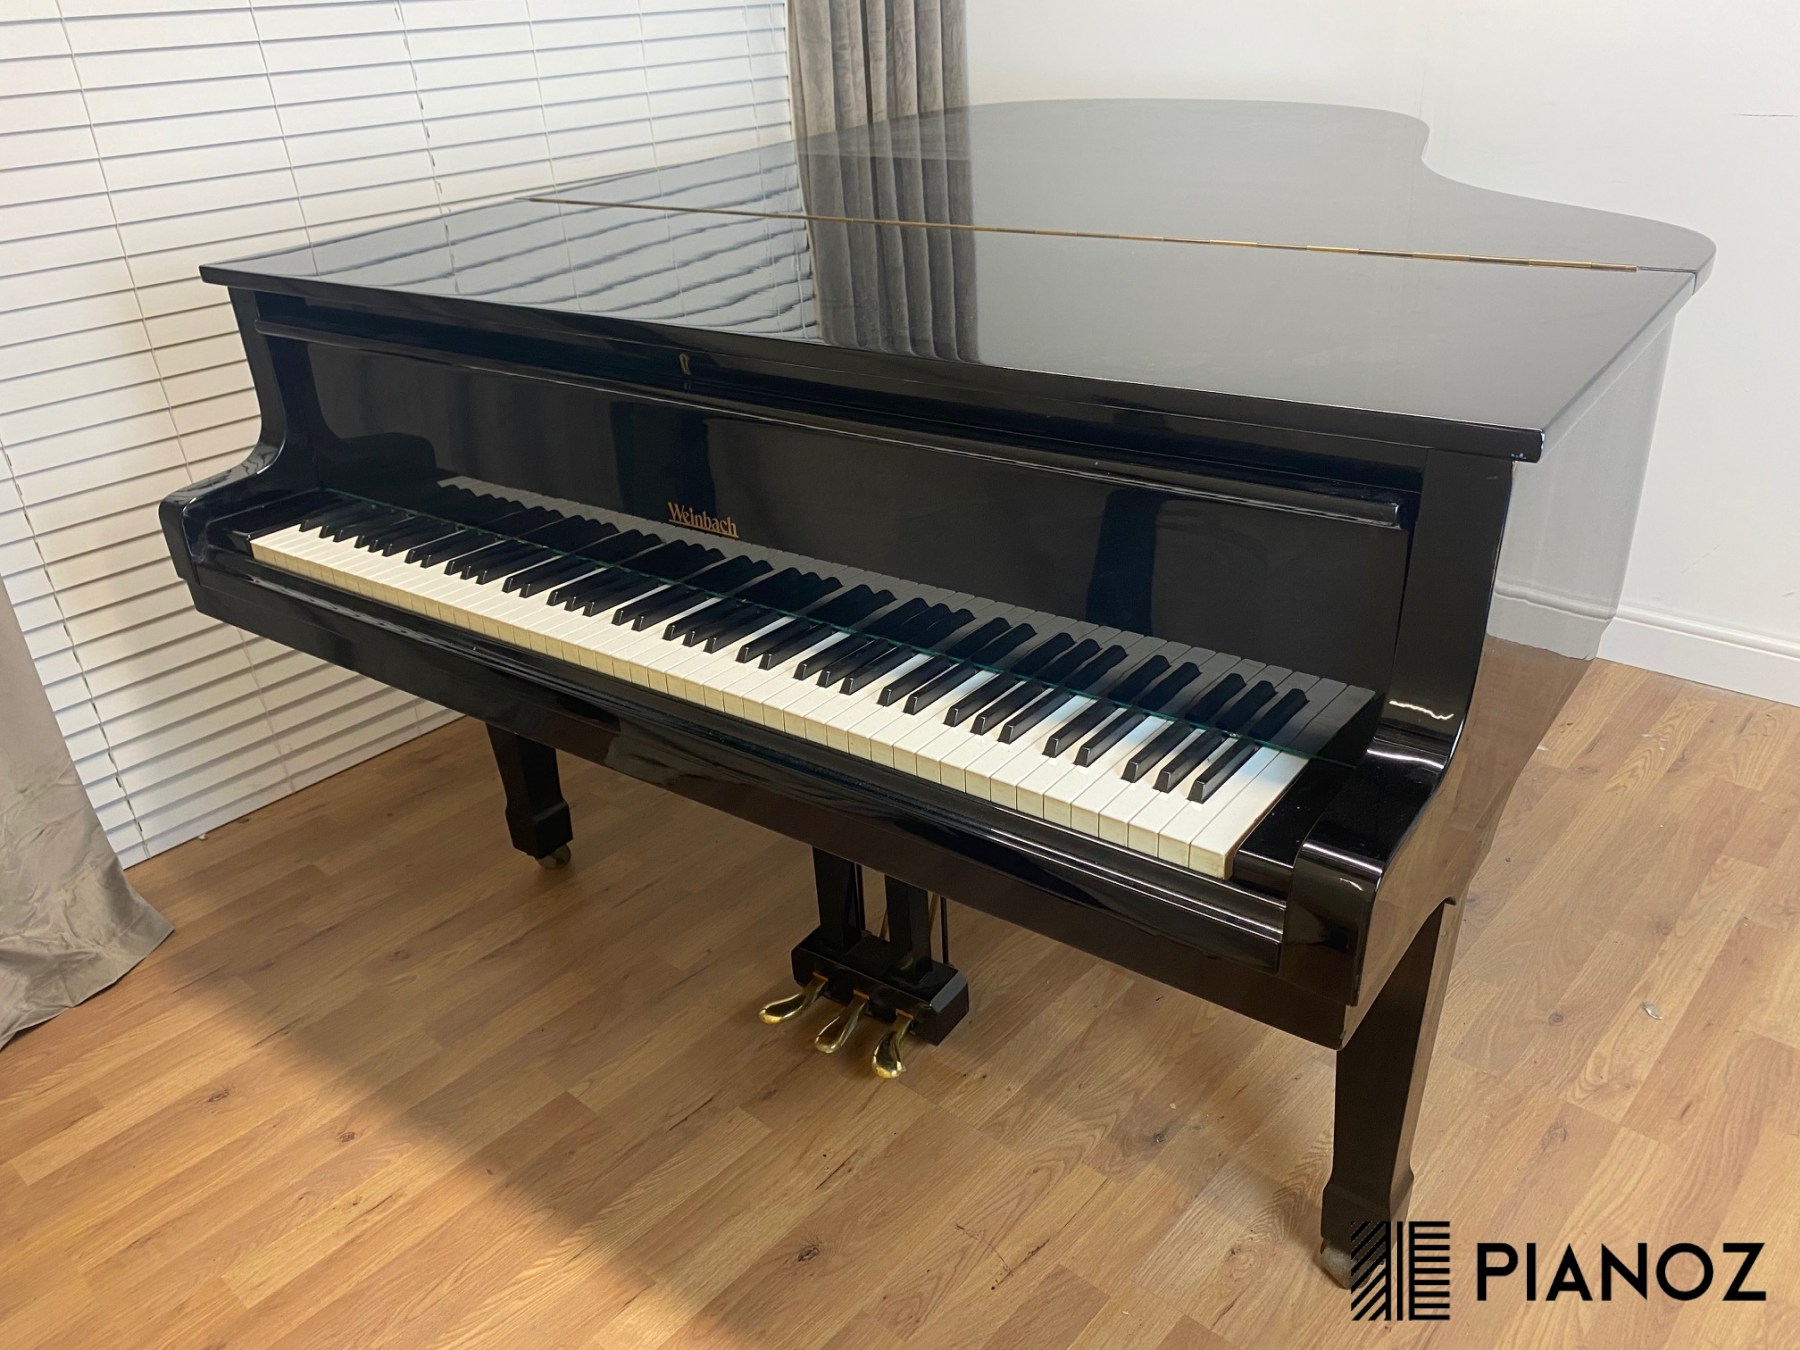 Weinbach 198 Grand Piano piano for sale in UK